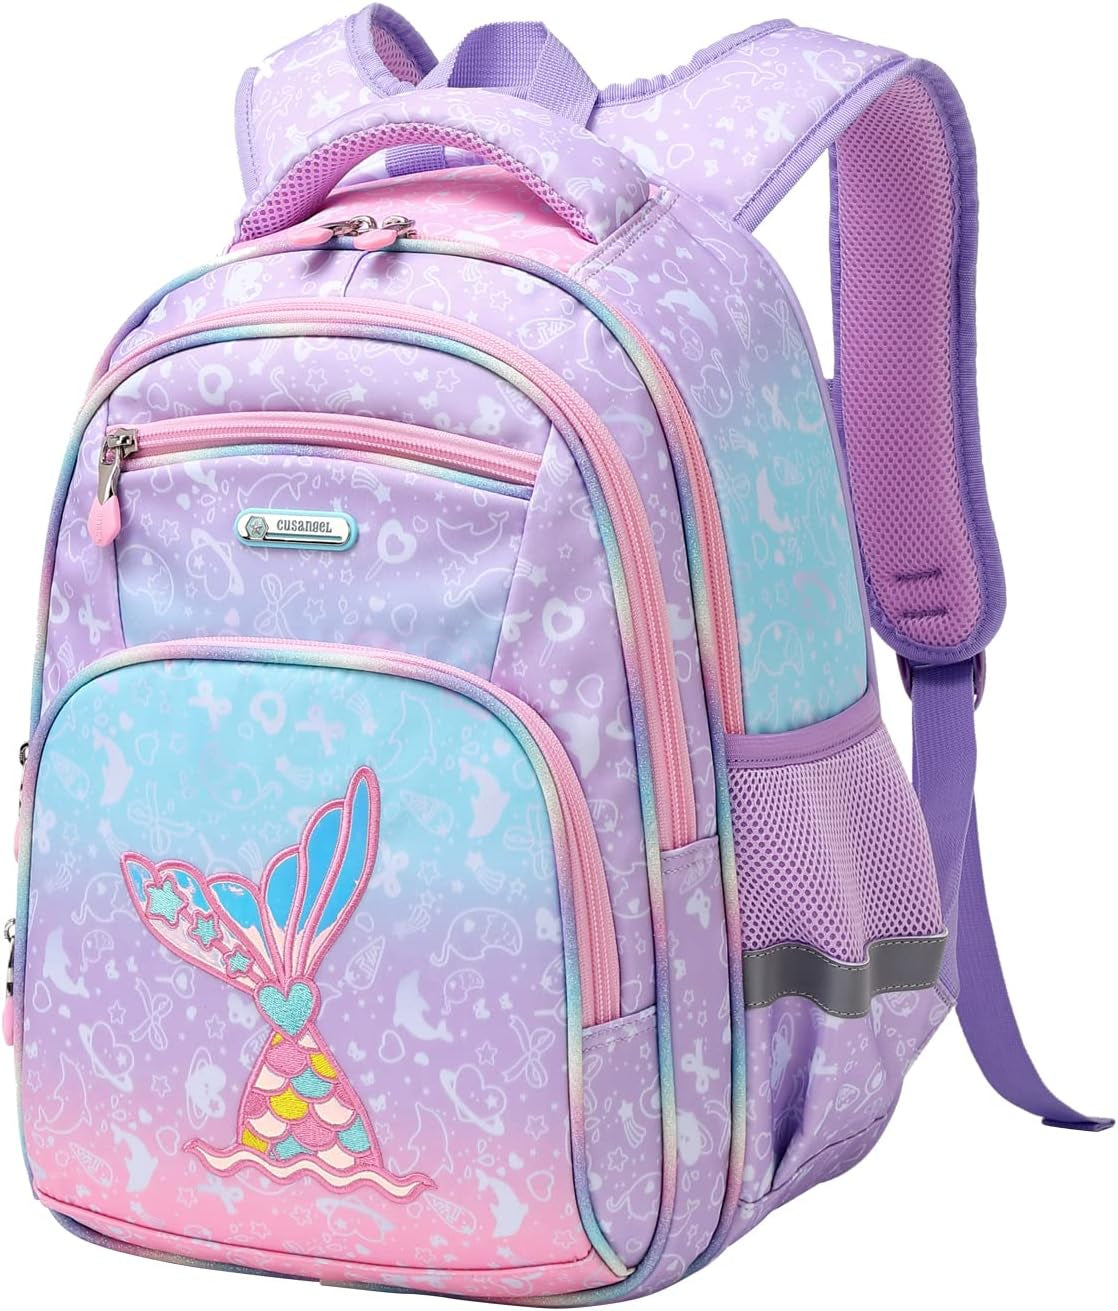 Backpack for Girls Boys School Bookbags Kindergarten Elementary Lightweight Waterproof Multifunctional Large Capacity for Backpack (16 Inch Fun Prints)